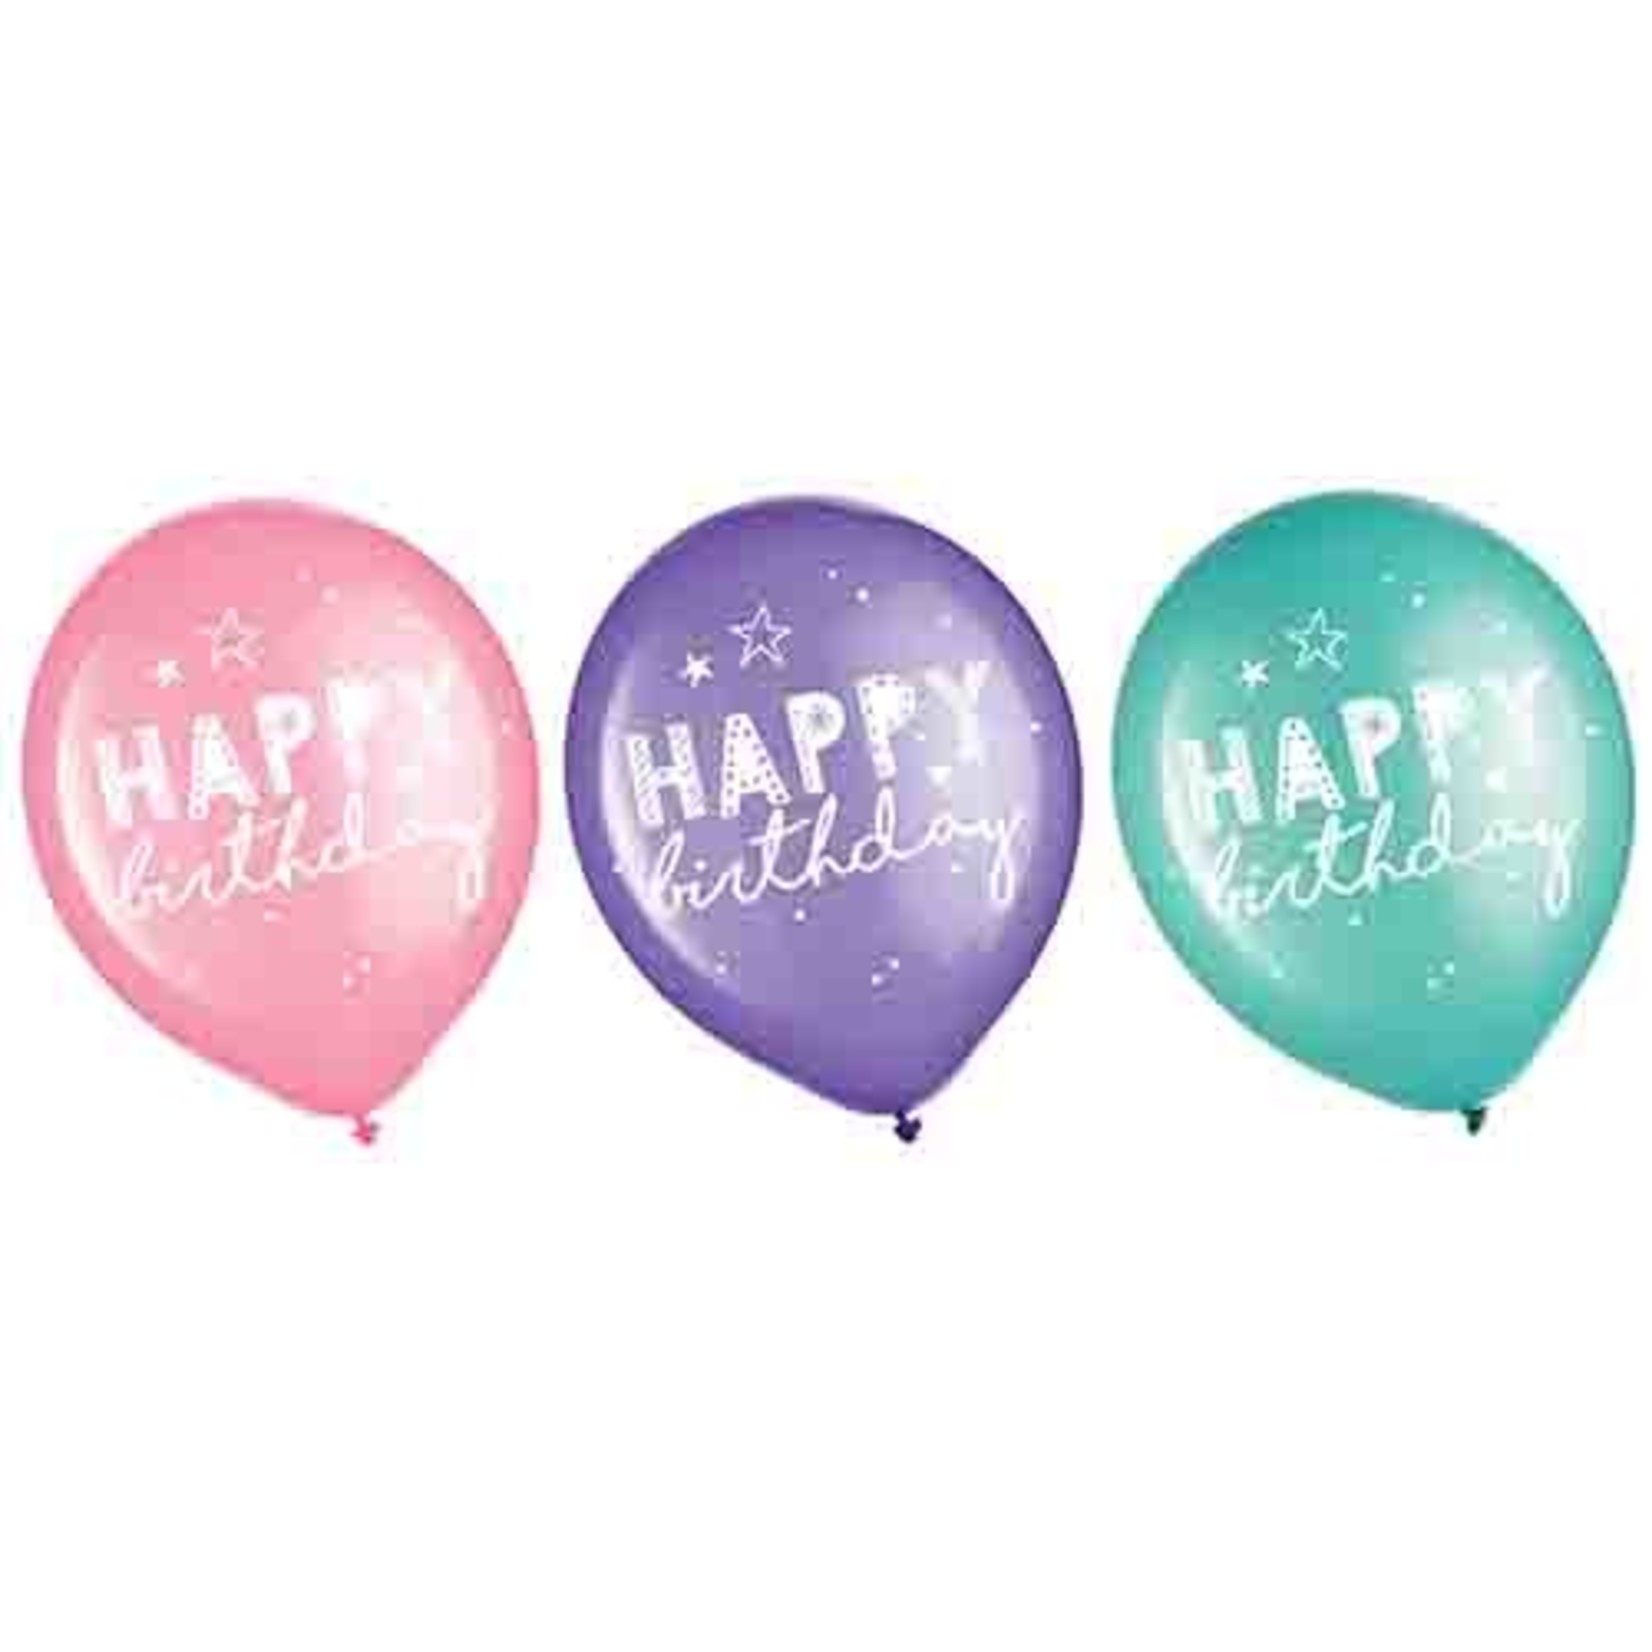 Amscan 12" Happy Birthday Pink, Teal, & Lav. Latex Balloons - 6ct.